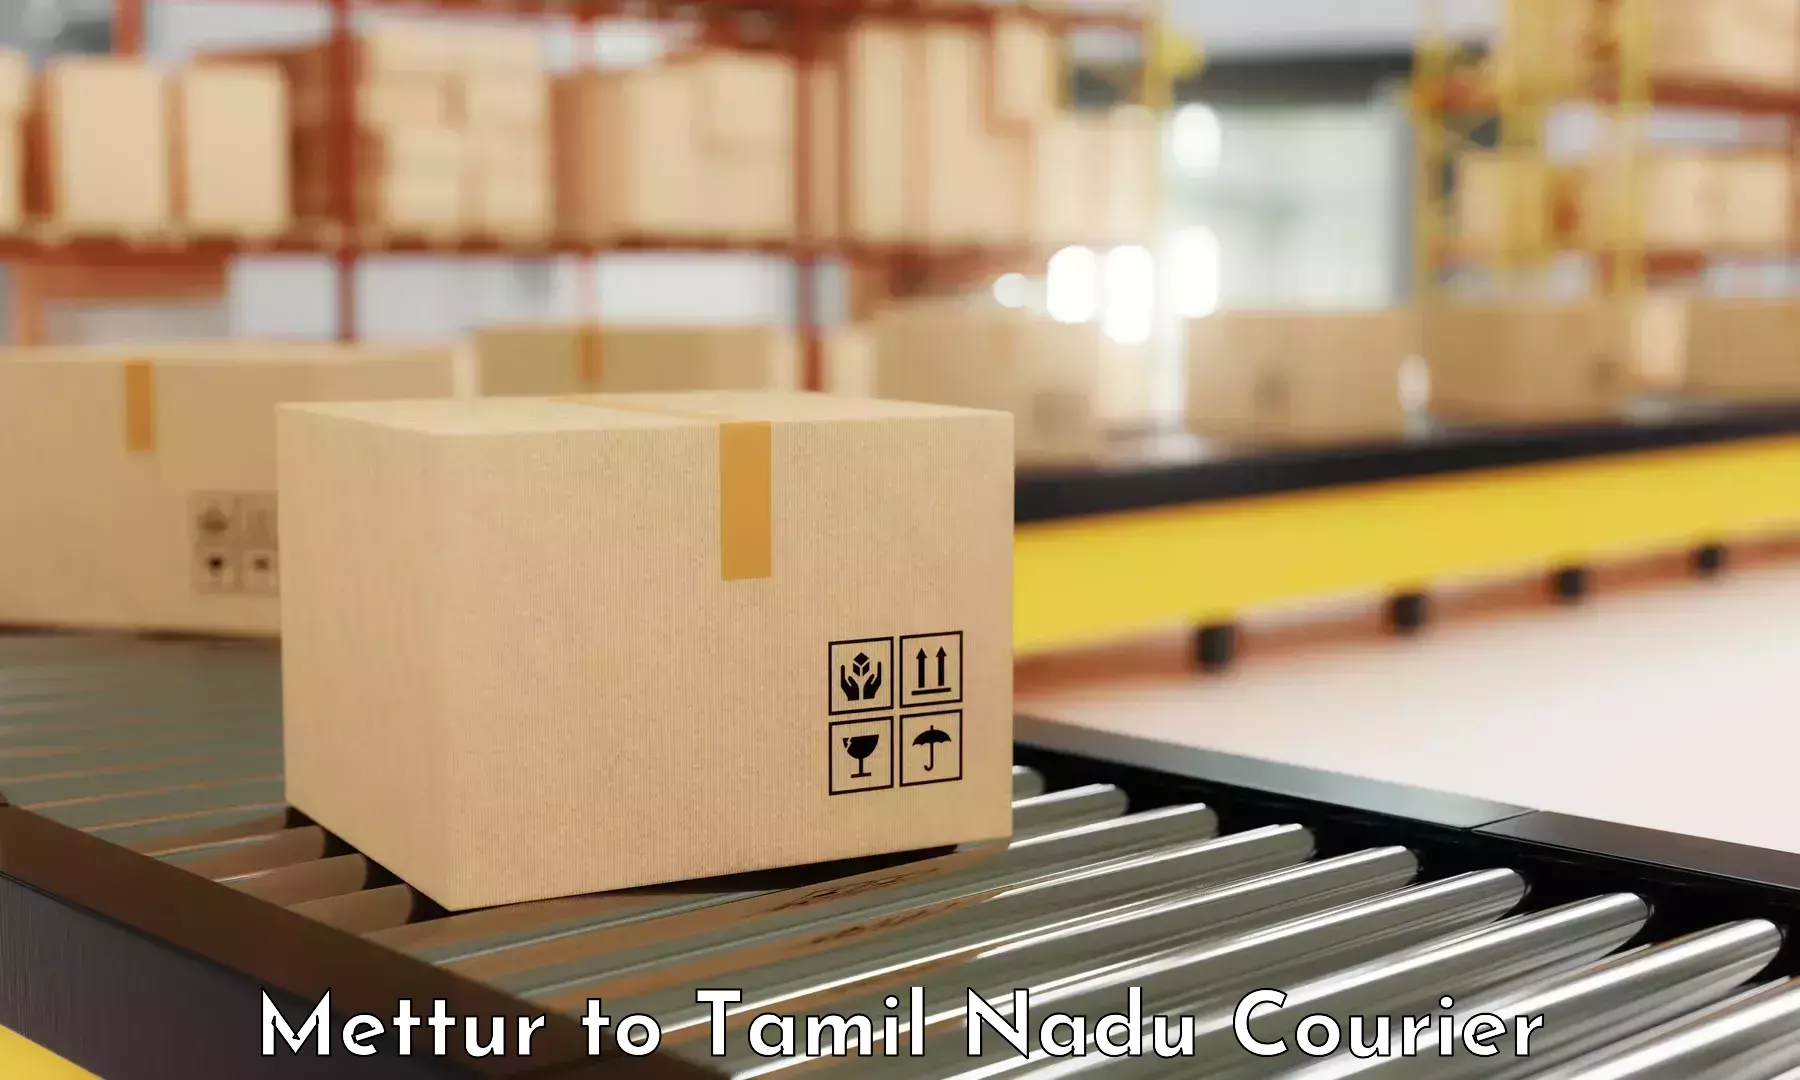 International parcel service Mettur to Ayyampettai